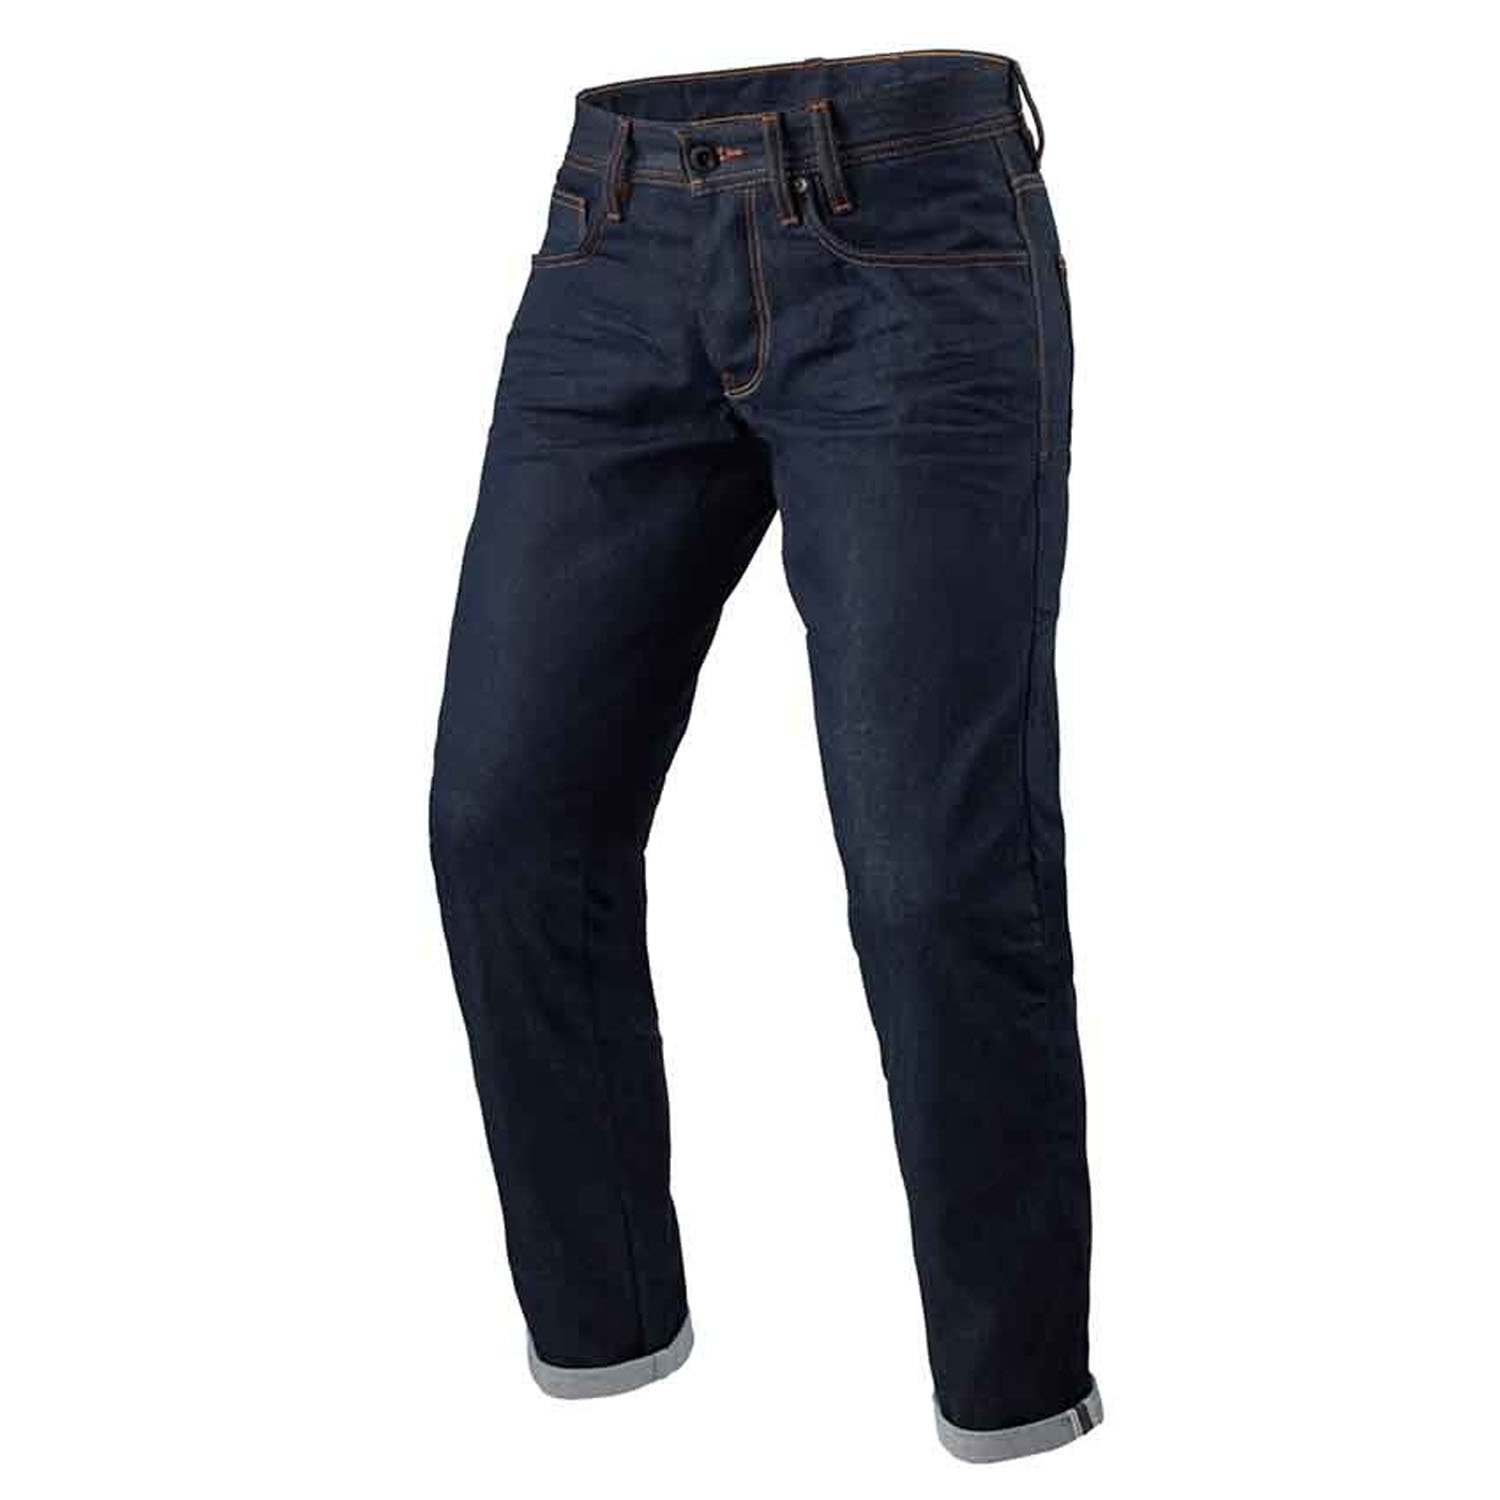 Image of REV'IT! Jeans Lewis Selvedge TF Dark Blue L36 Motorcycle Pants Größe L36/W32